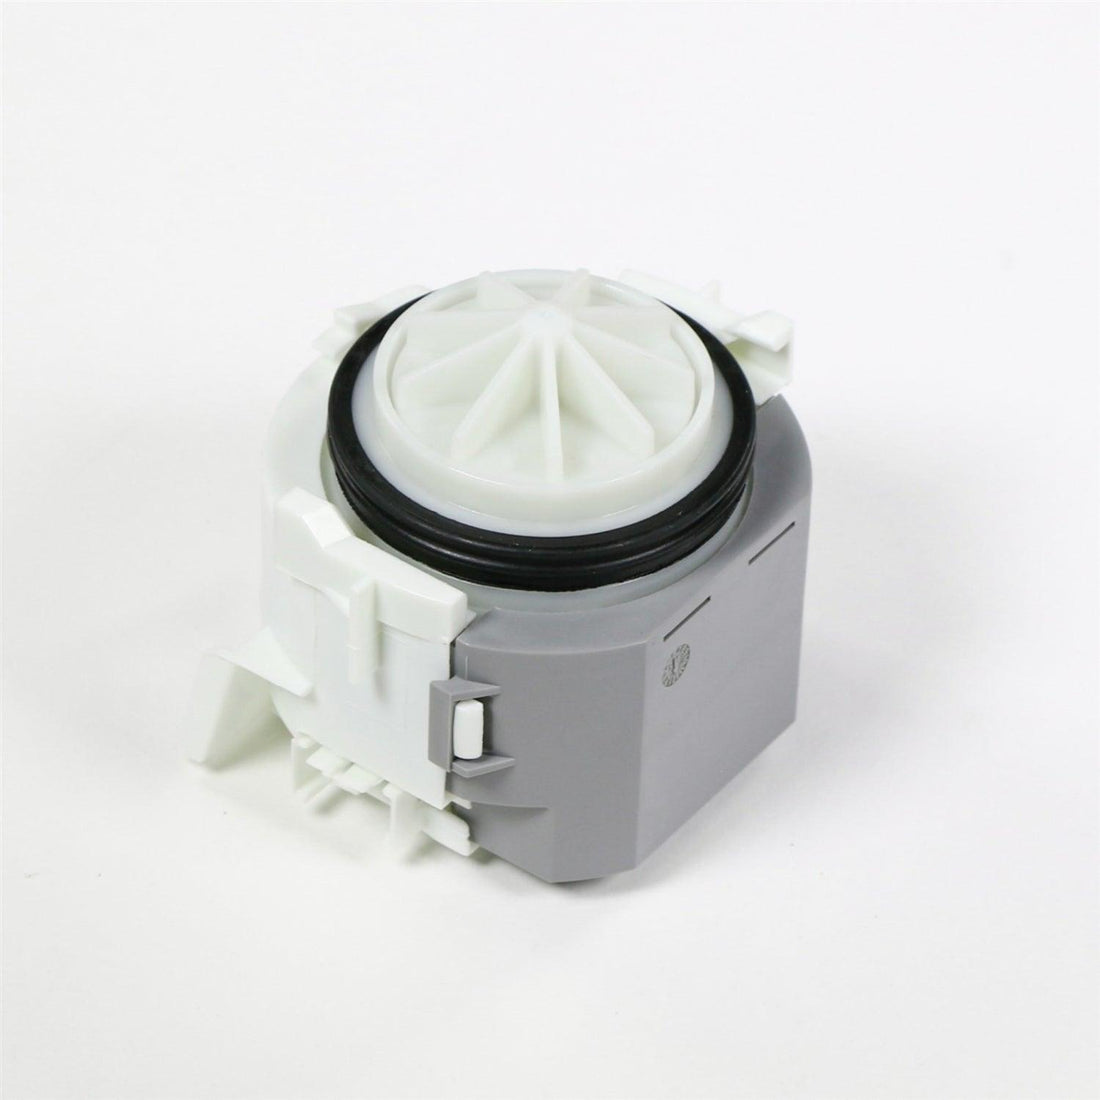 Bosch 00631200 Dishwasher Drain Pump